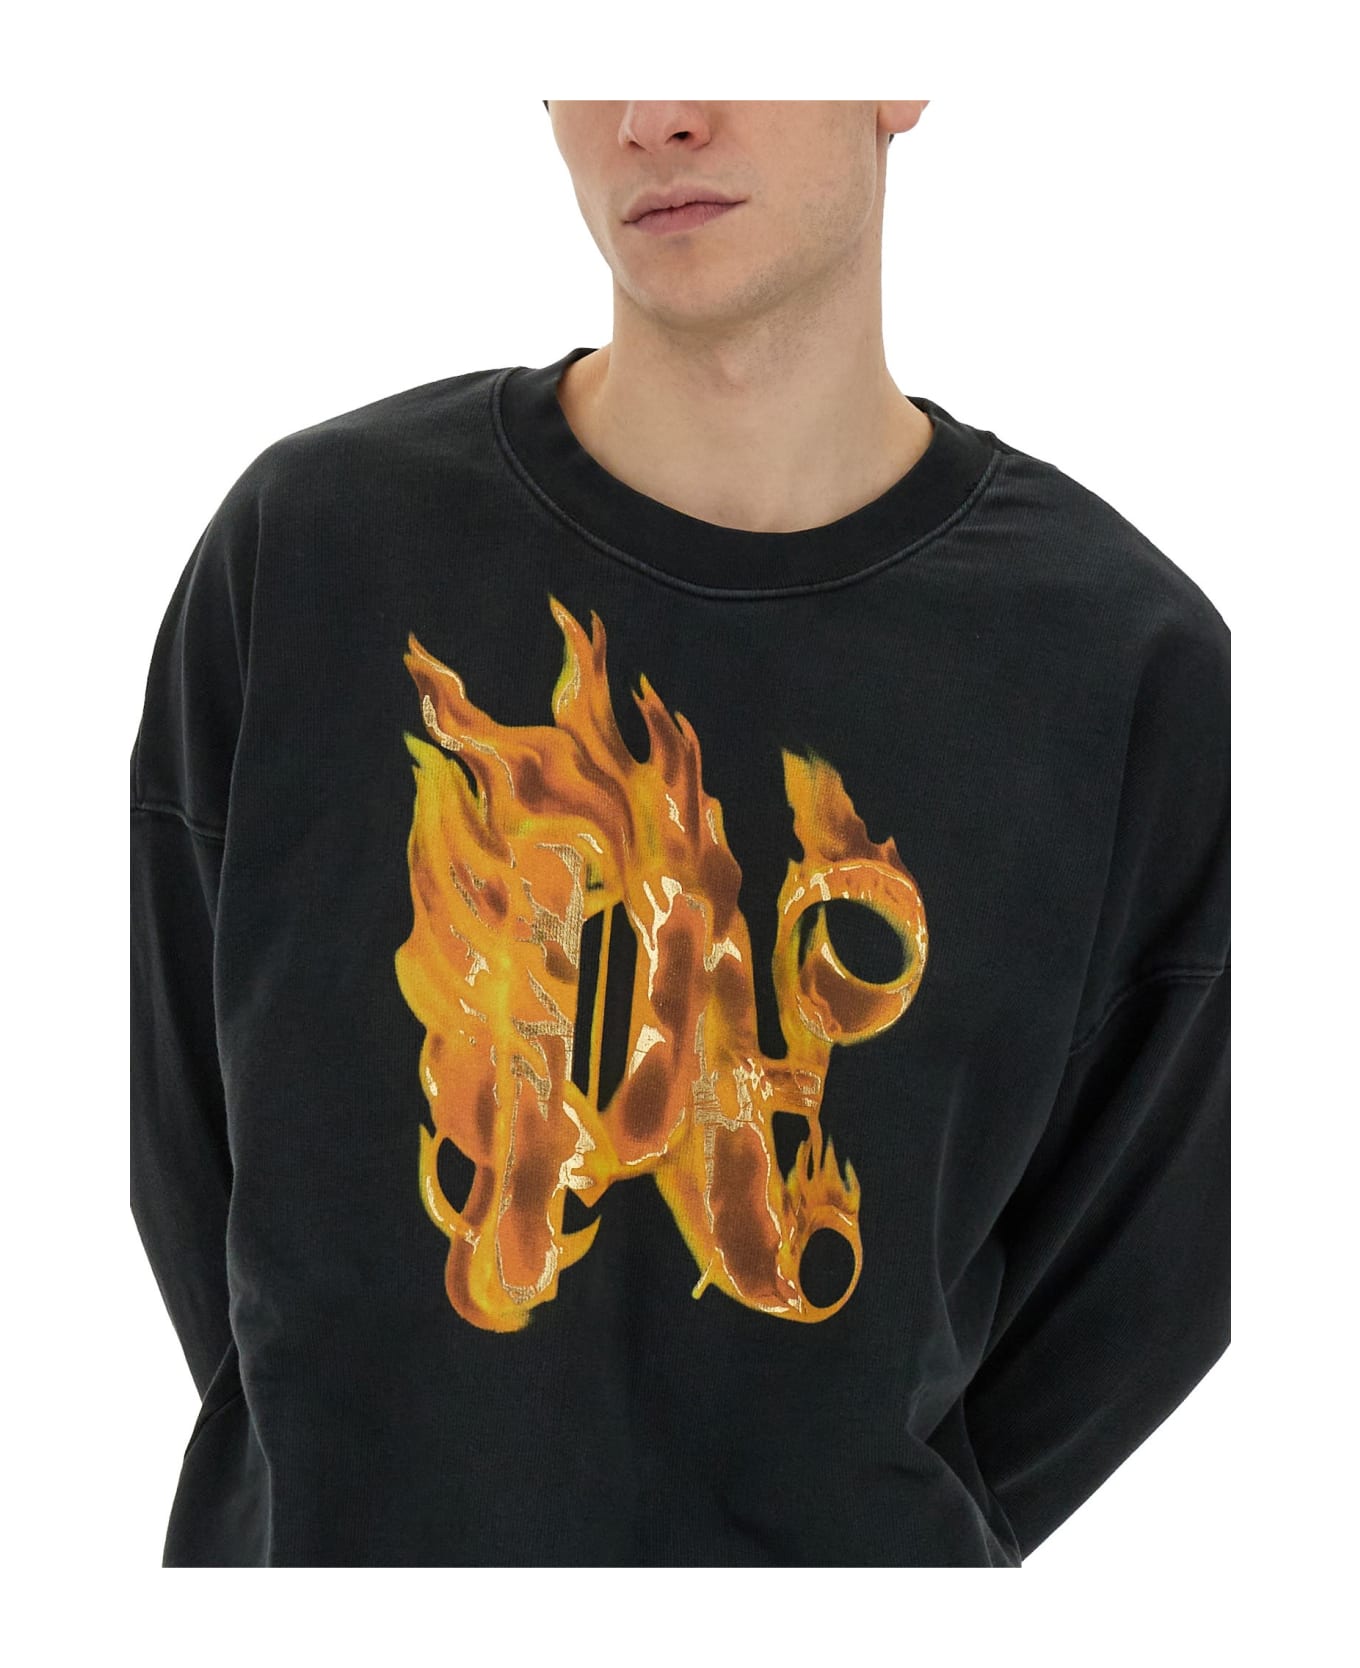 Palm Angels Burning Monogram Print Sweatshirt - Black